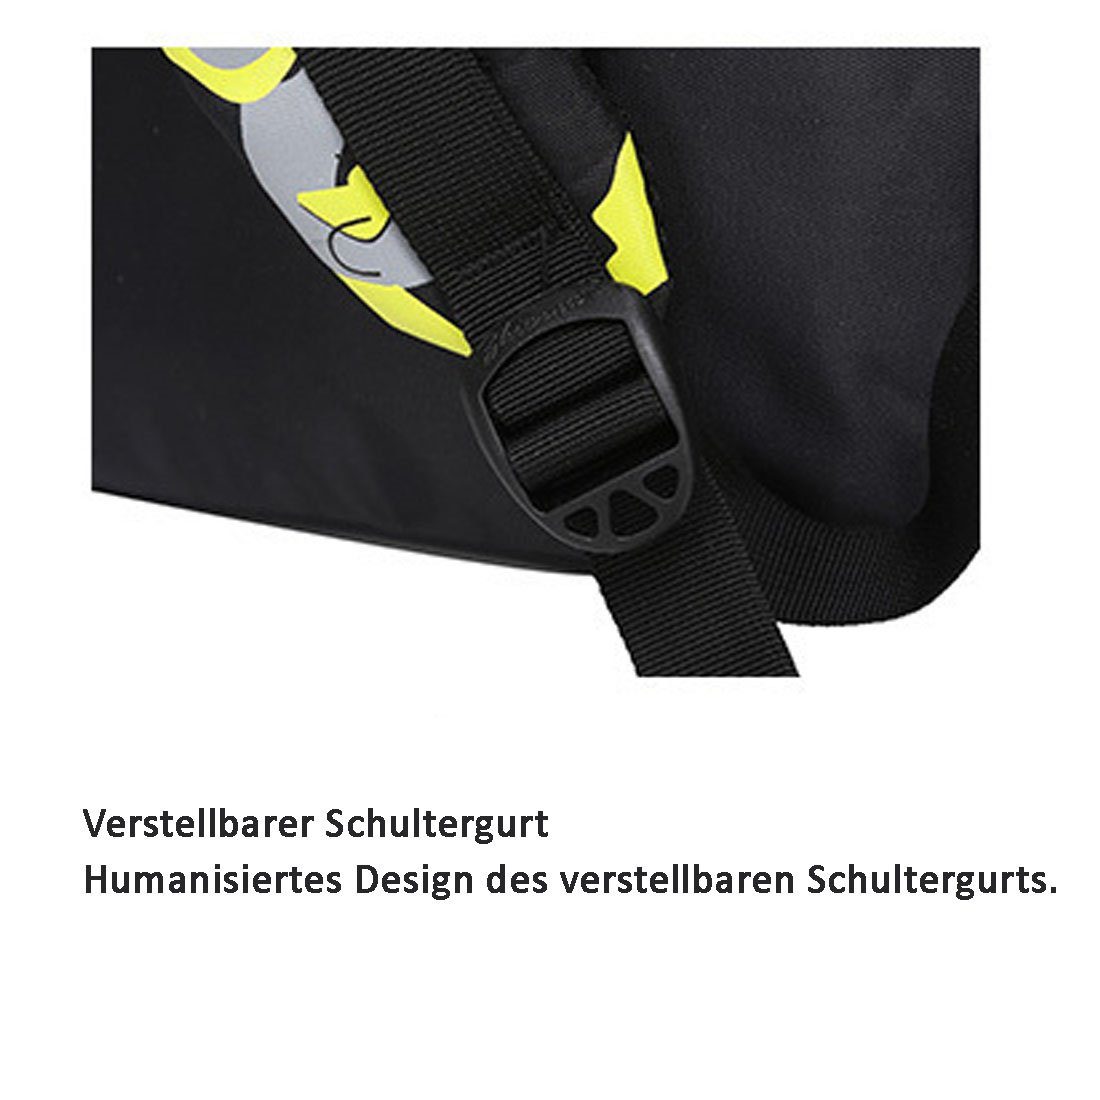 DÖRÖY Schulrucksack Student gedruckt Kinder Schulranzen Stück Set, Camouflage Backpack Gelb 3